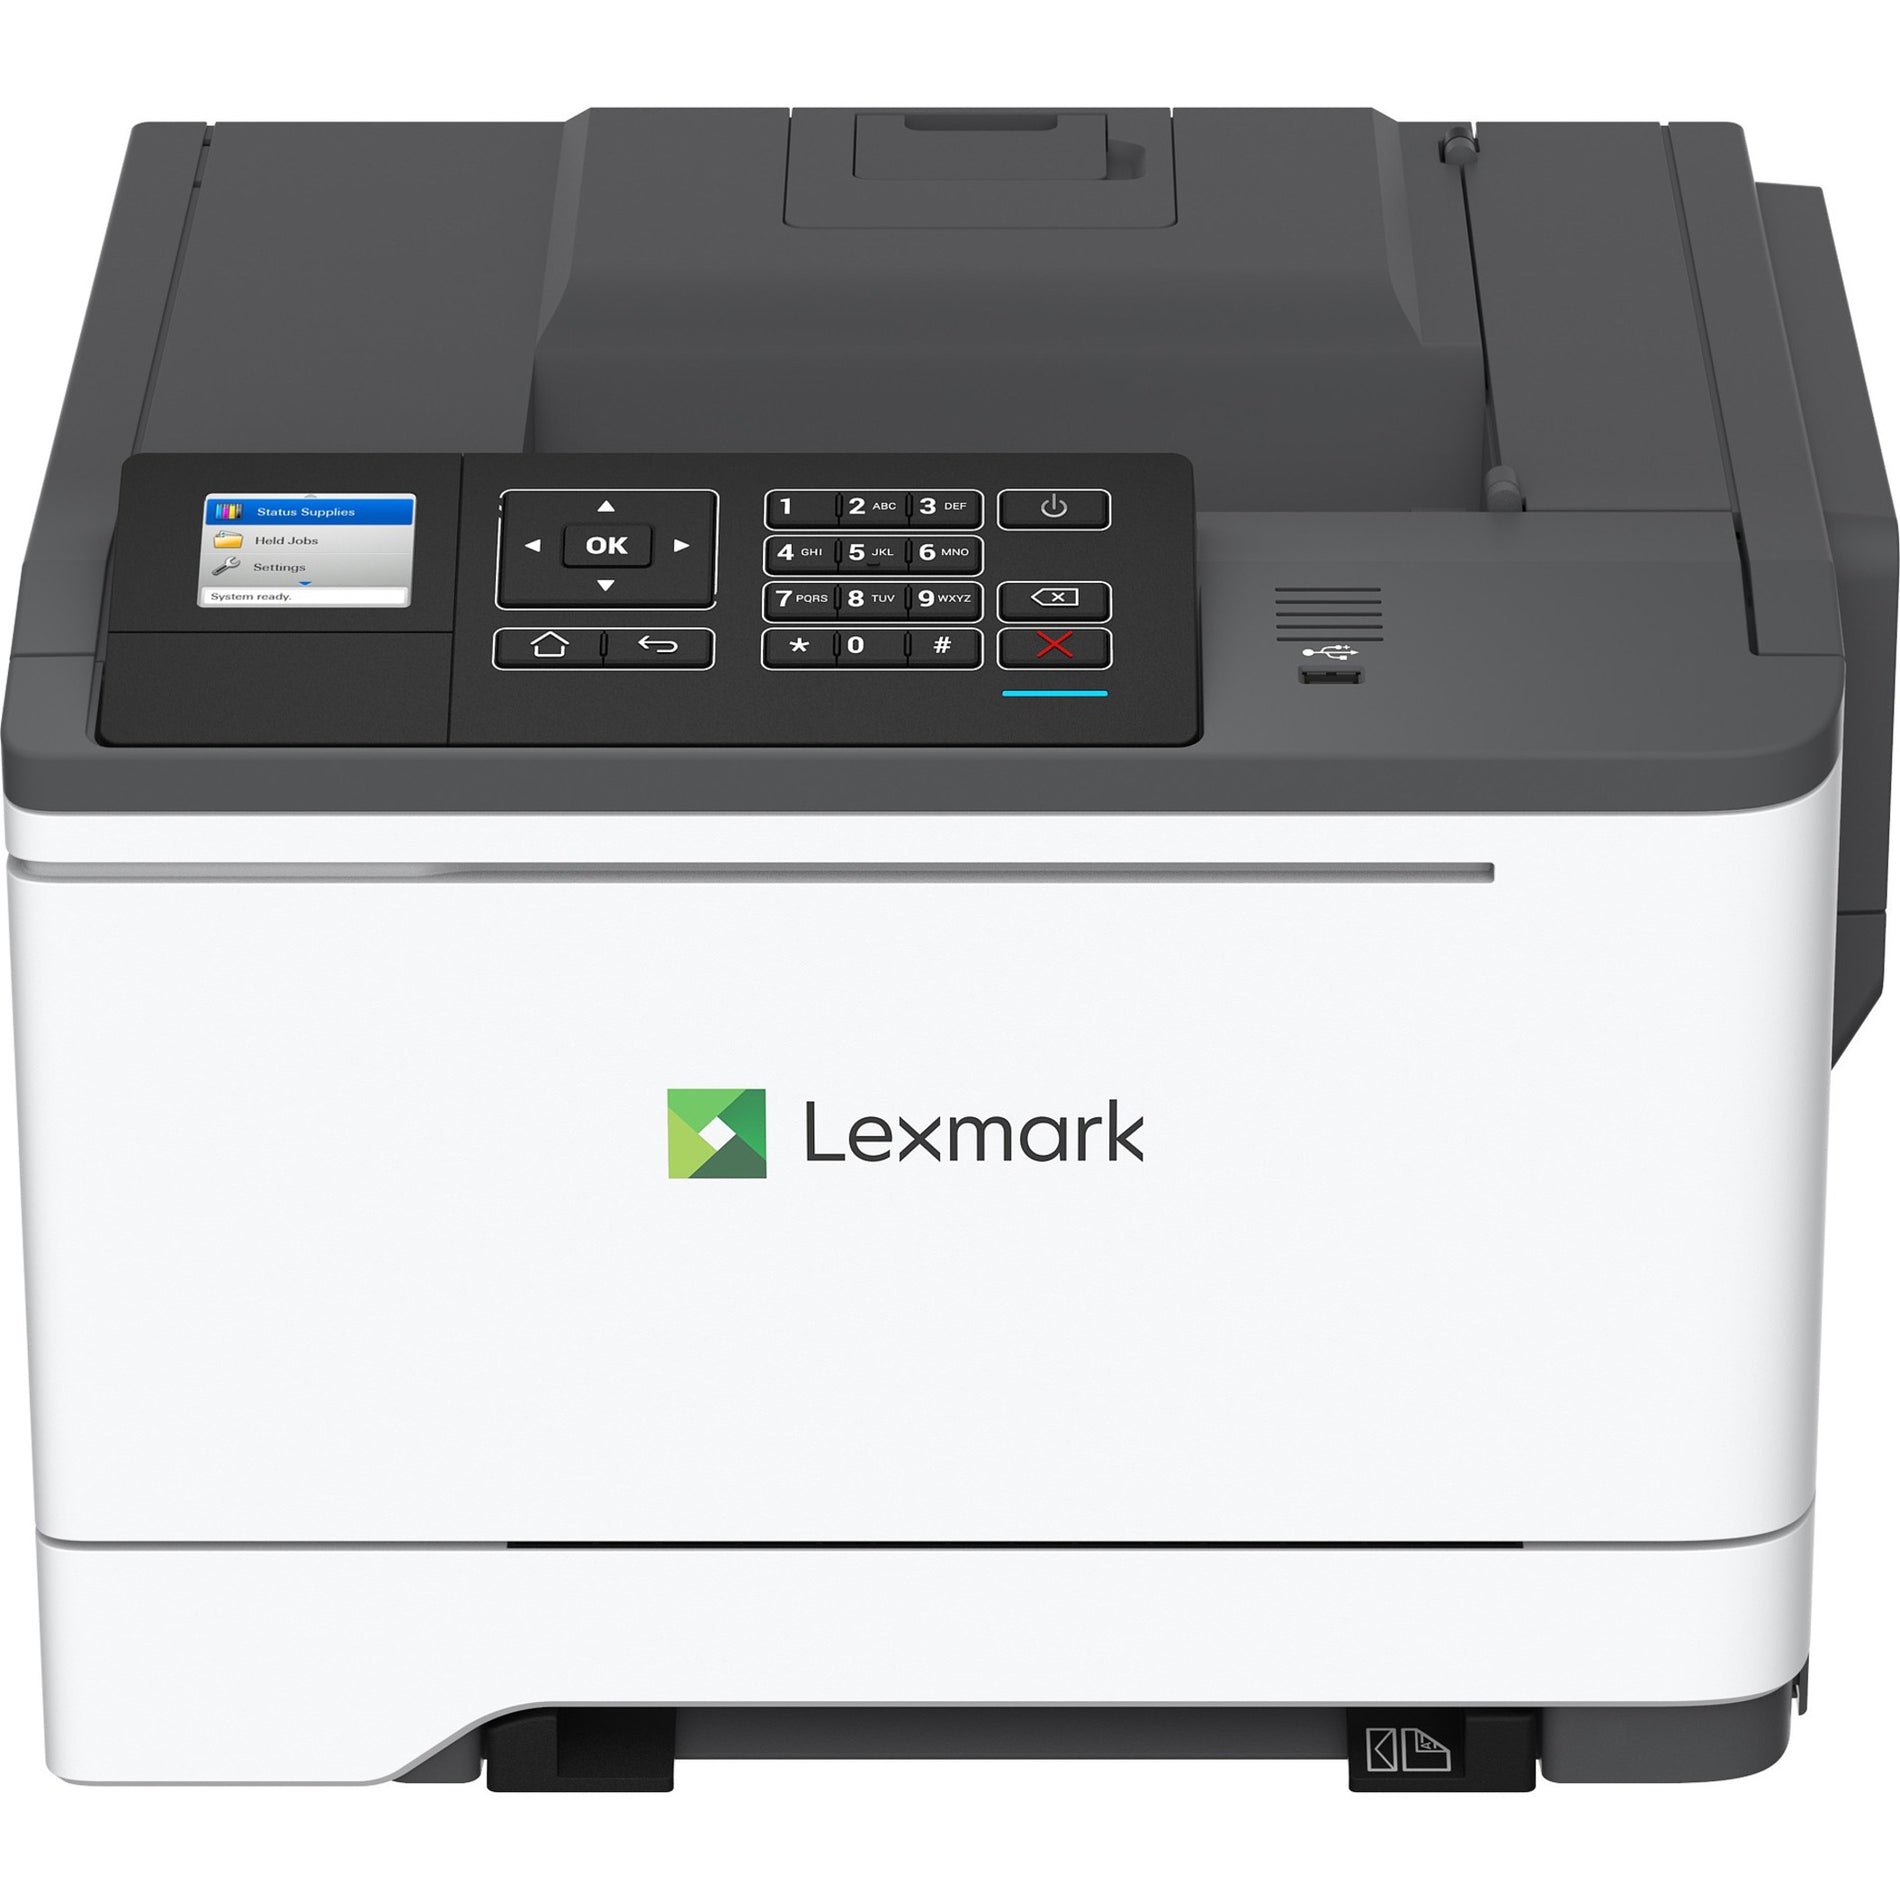 Lexmark 42CT060 CS521dn Color Laser Printer, Automatic Duplex Printing, USB Direct Printing, 35 ppm Print Speed